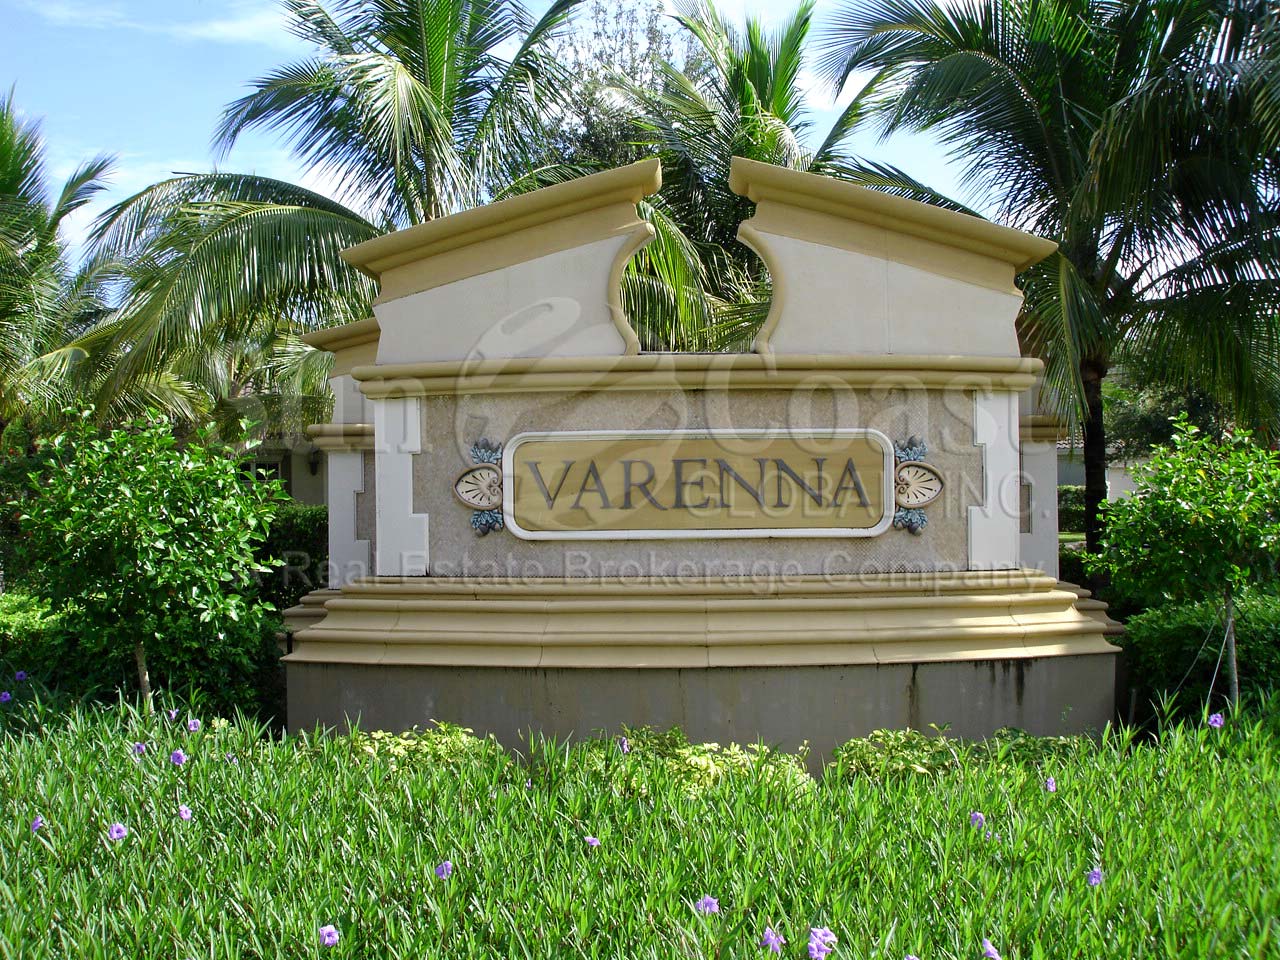 Varenna Signage